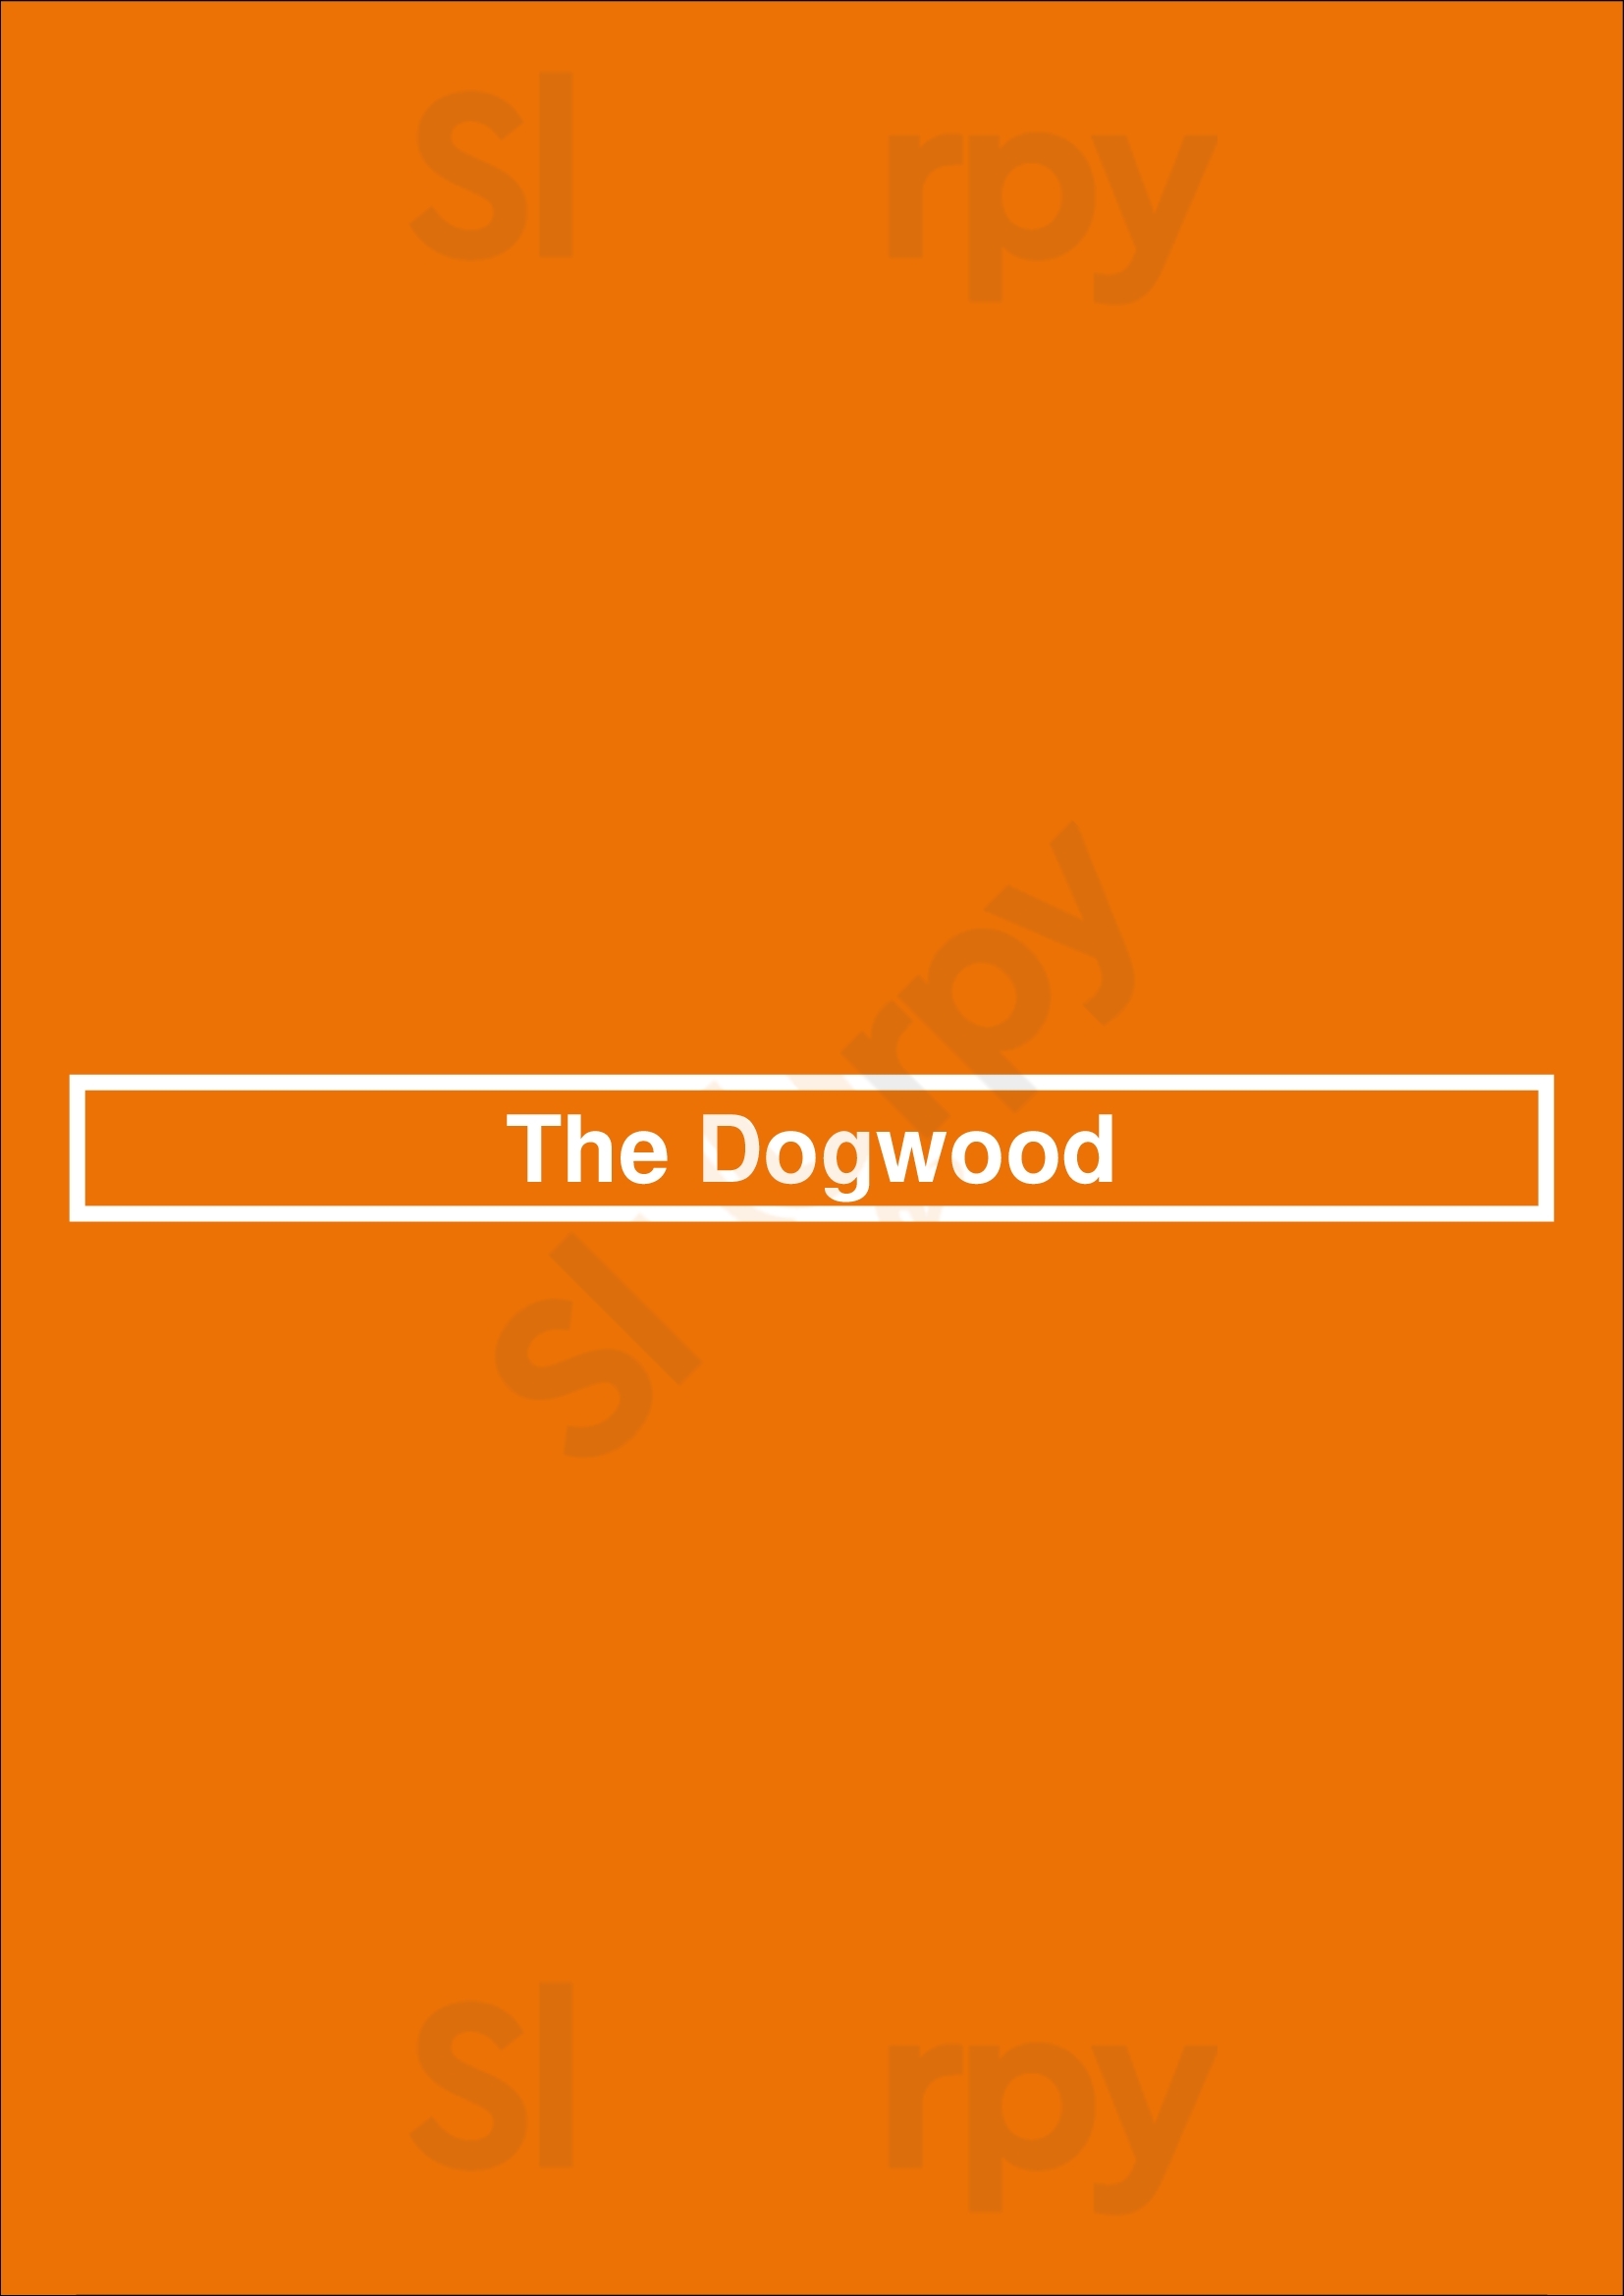 The Dogwood Austin Menu - 1